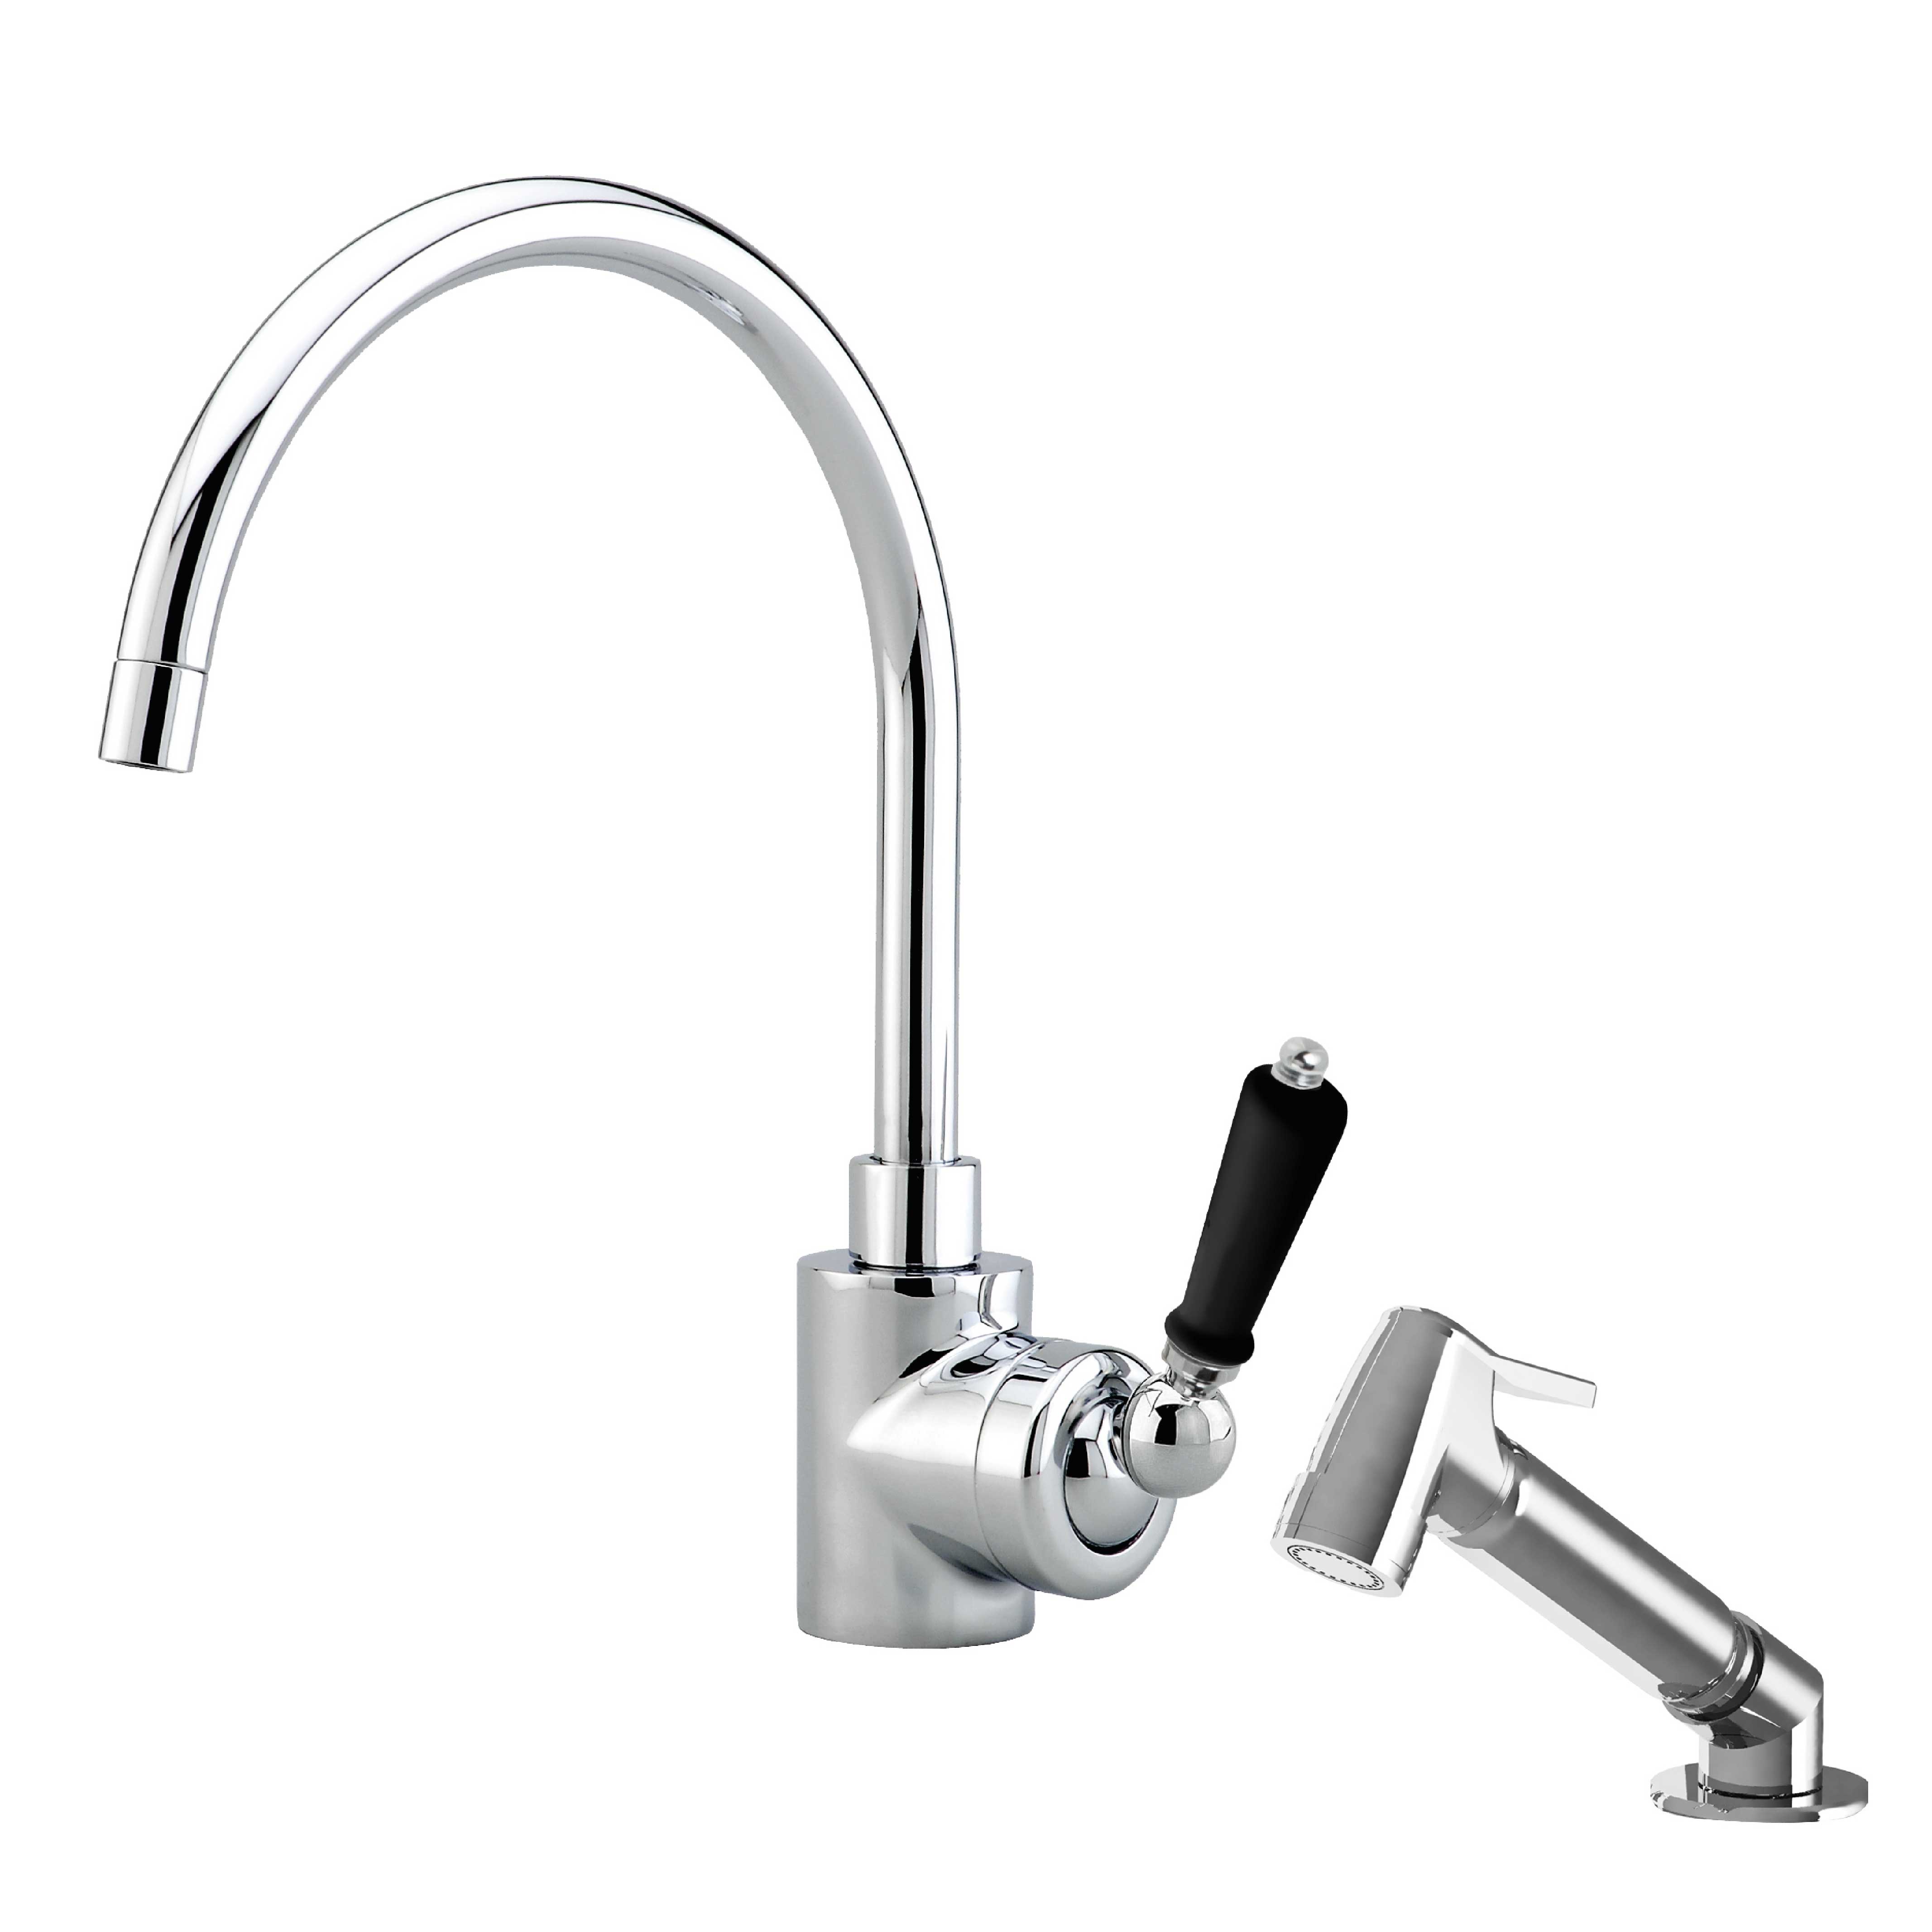 MKC-1BY5S Single-hole lever kitchen mixer & handspray